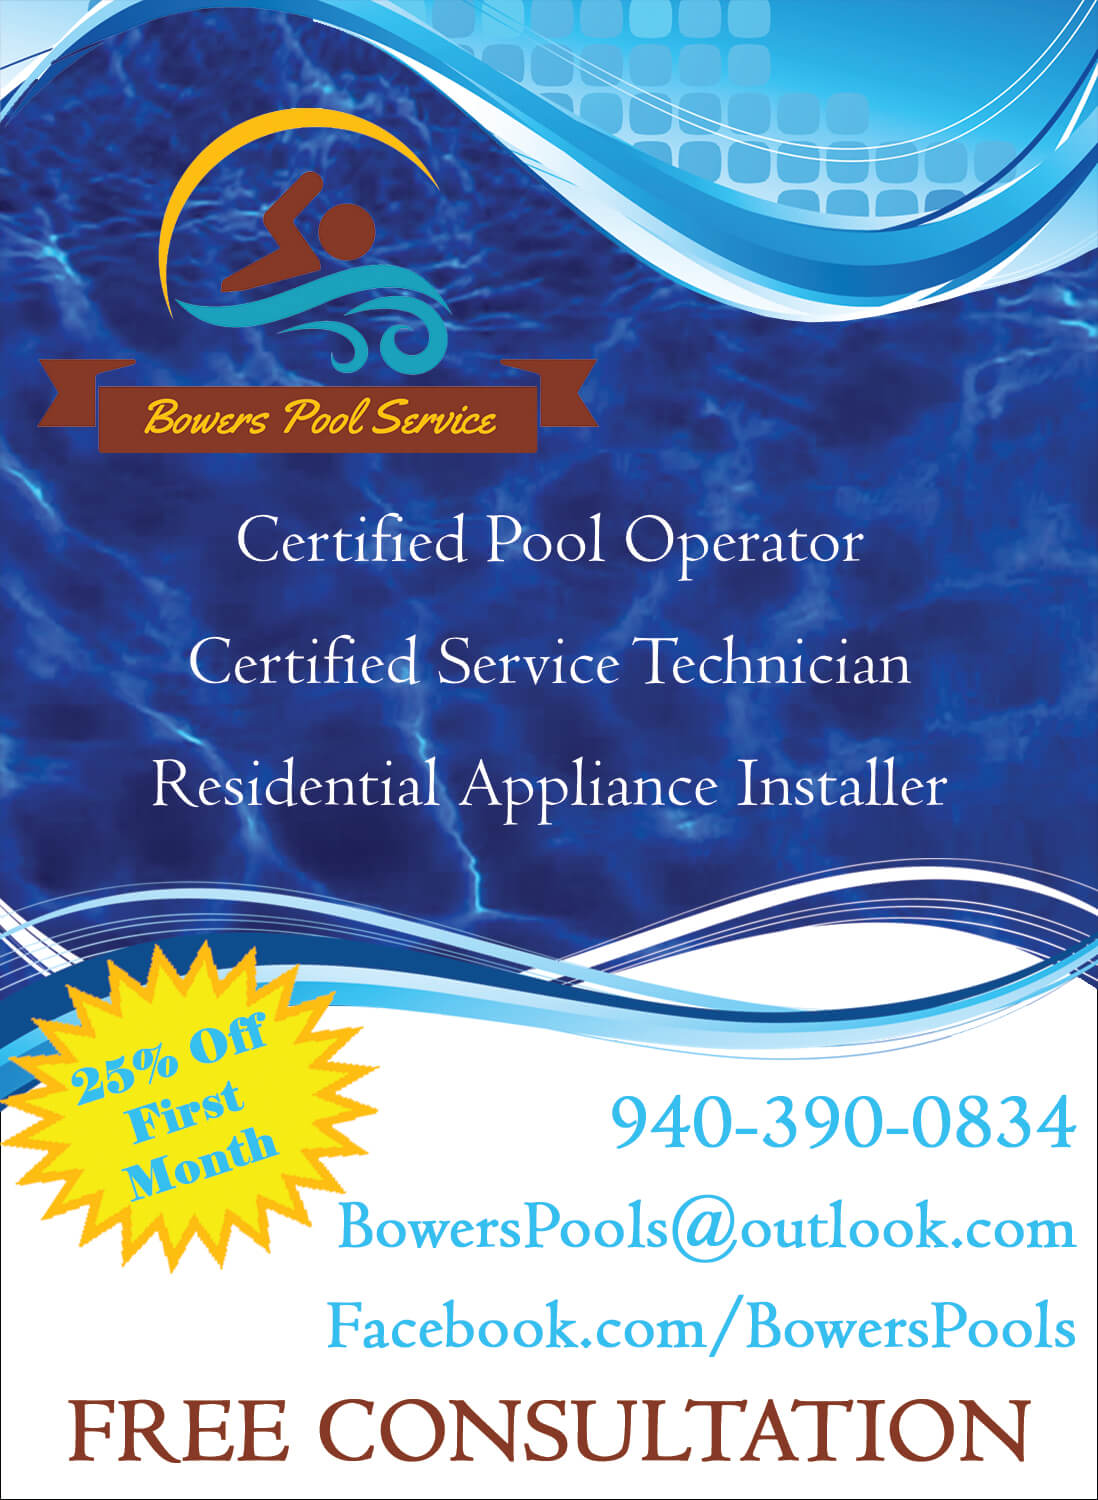 Bowers Pool Service ad design